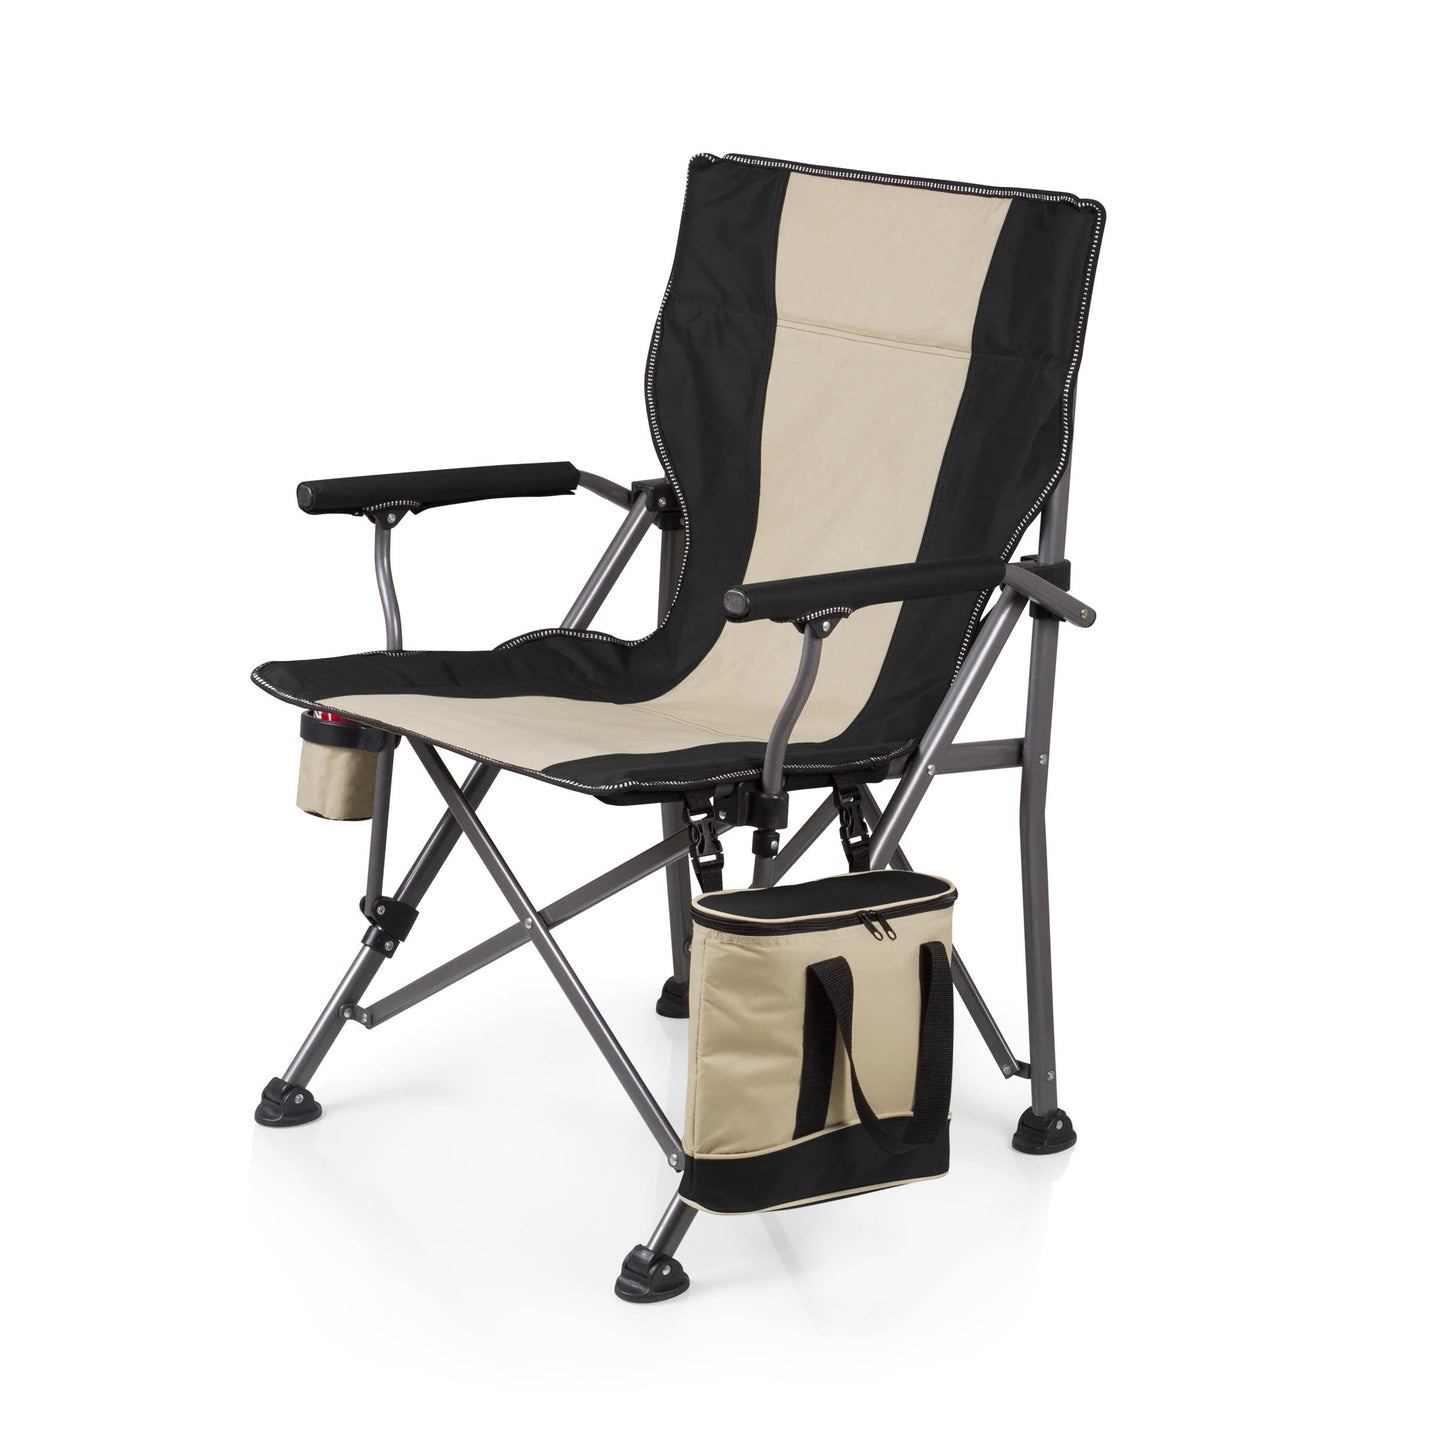 Denver Broncos - Outlander Folding Camping Chair with Cooler